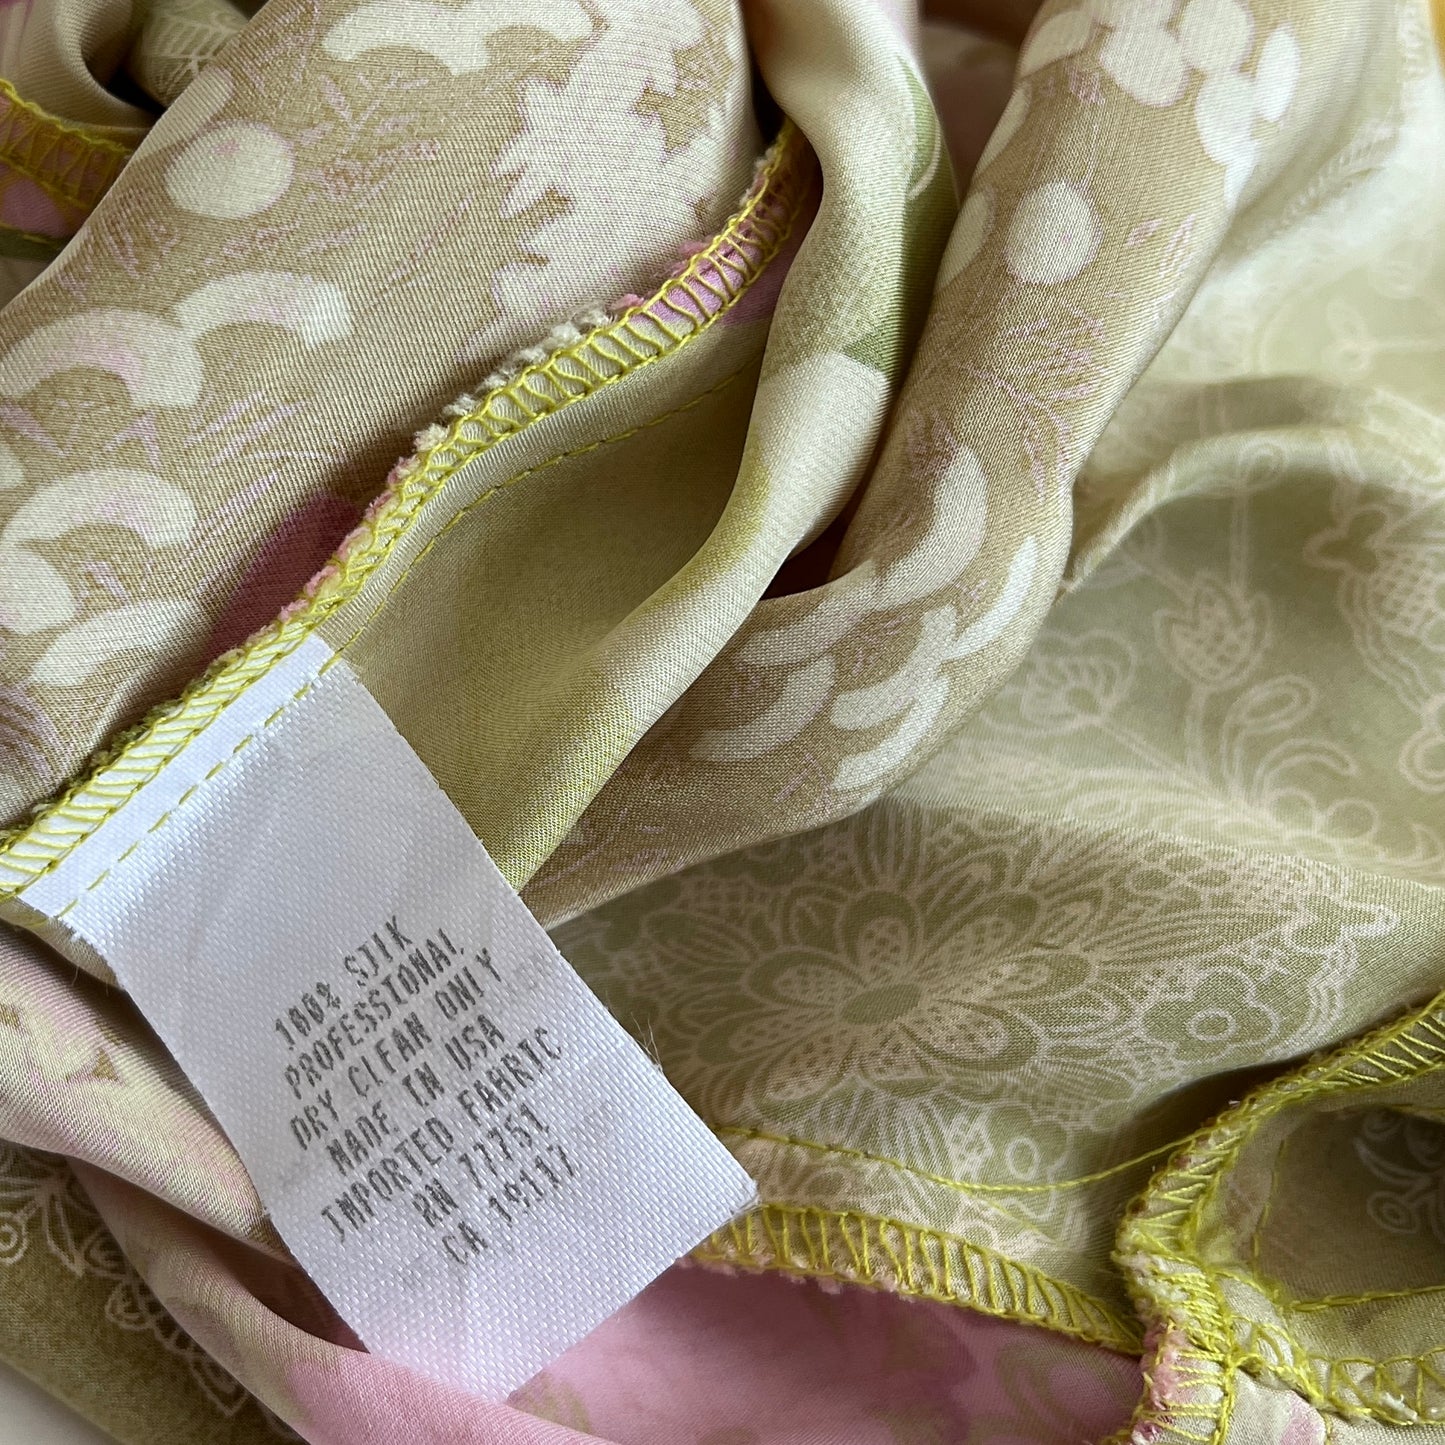 Vintage Betsey Johnson 100% silk garden fairy dress (M)